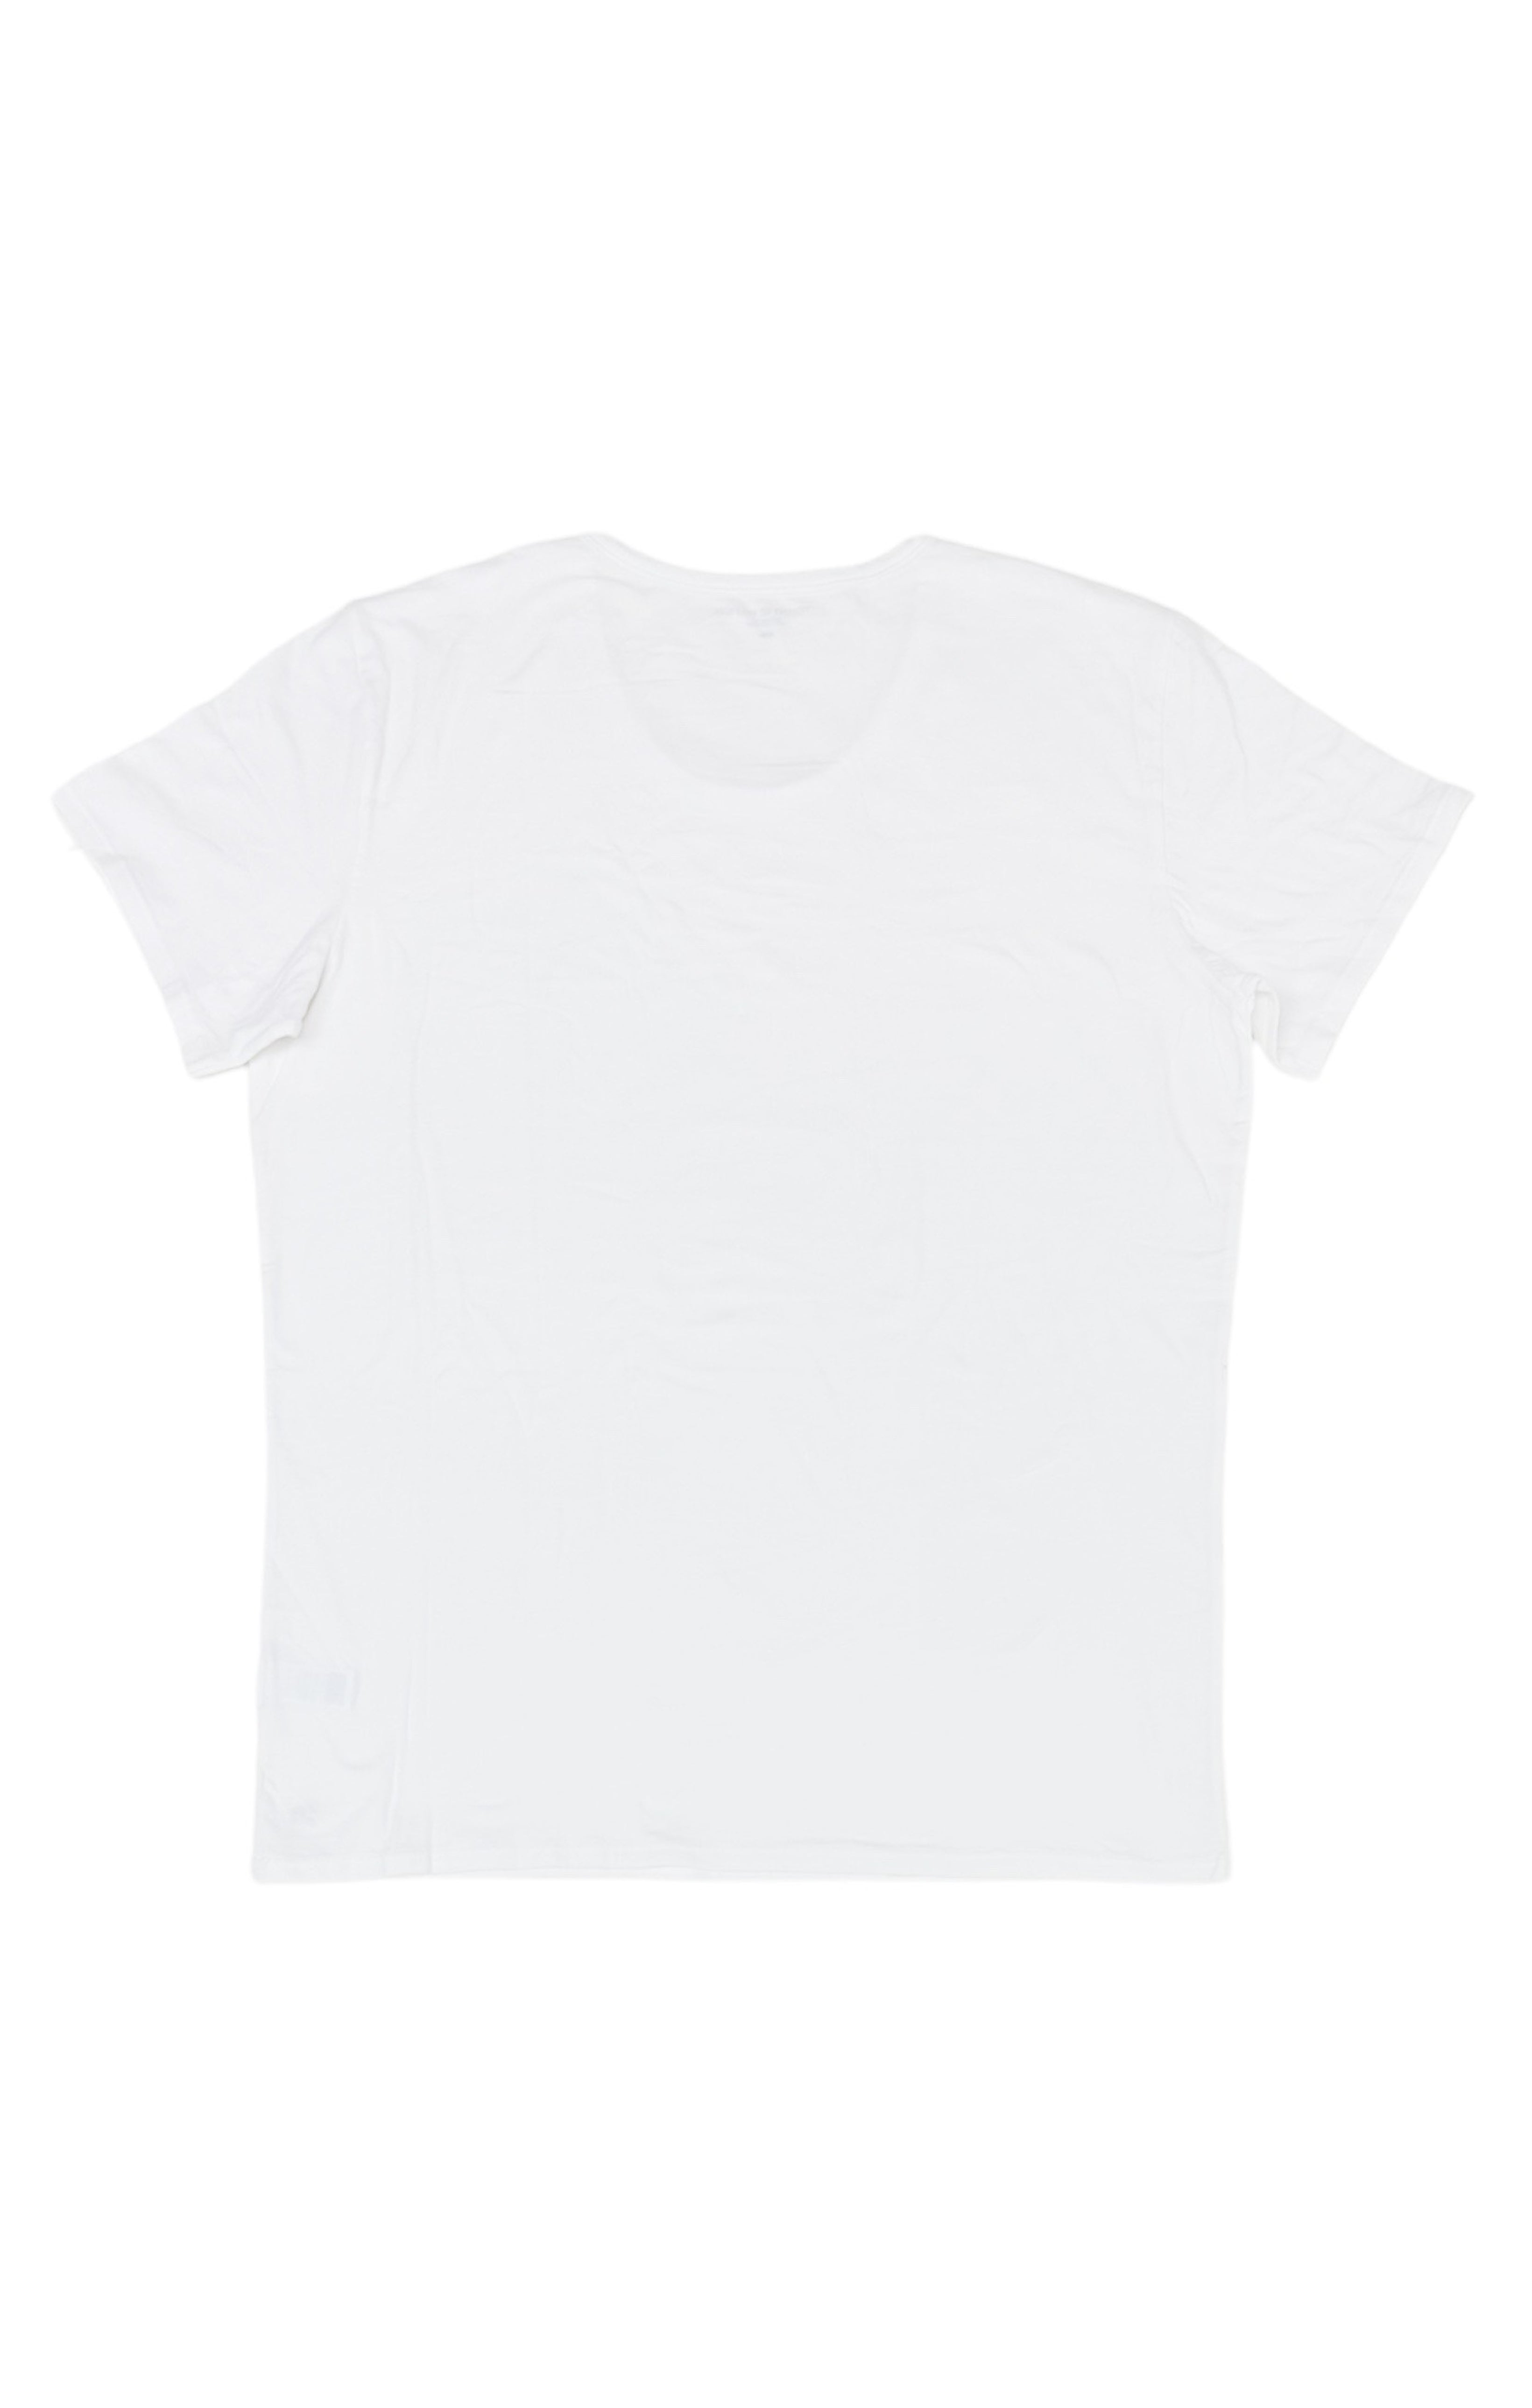 TOMMY HILFIGER T-shirt Size: 2XL